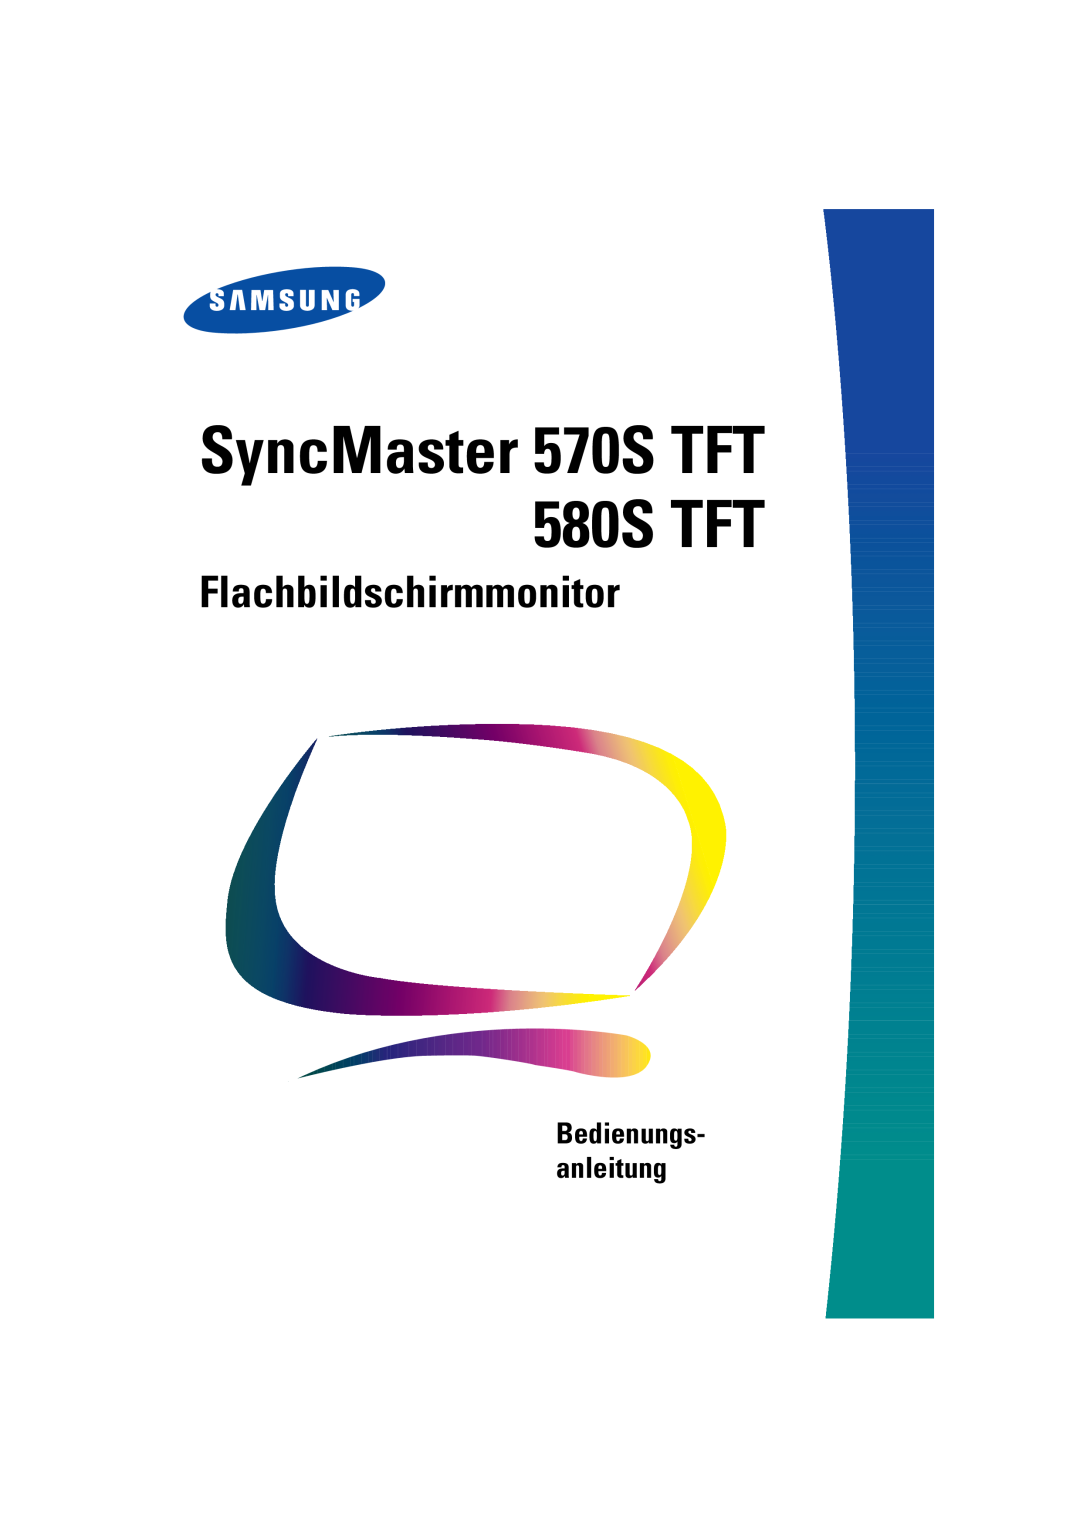 Samsung CN15LSPS/EDC, 570STFT manual SyncMaster 570S TFT 580S TFT, Flachbildschirmmonitor, Bedienungs- anleitung 